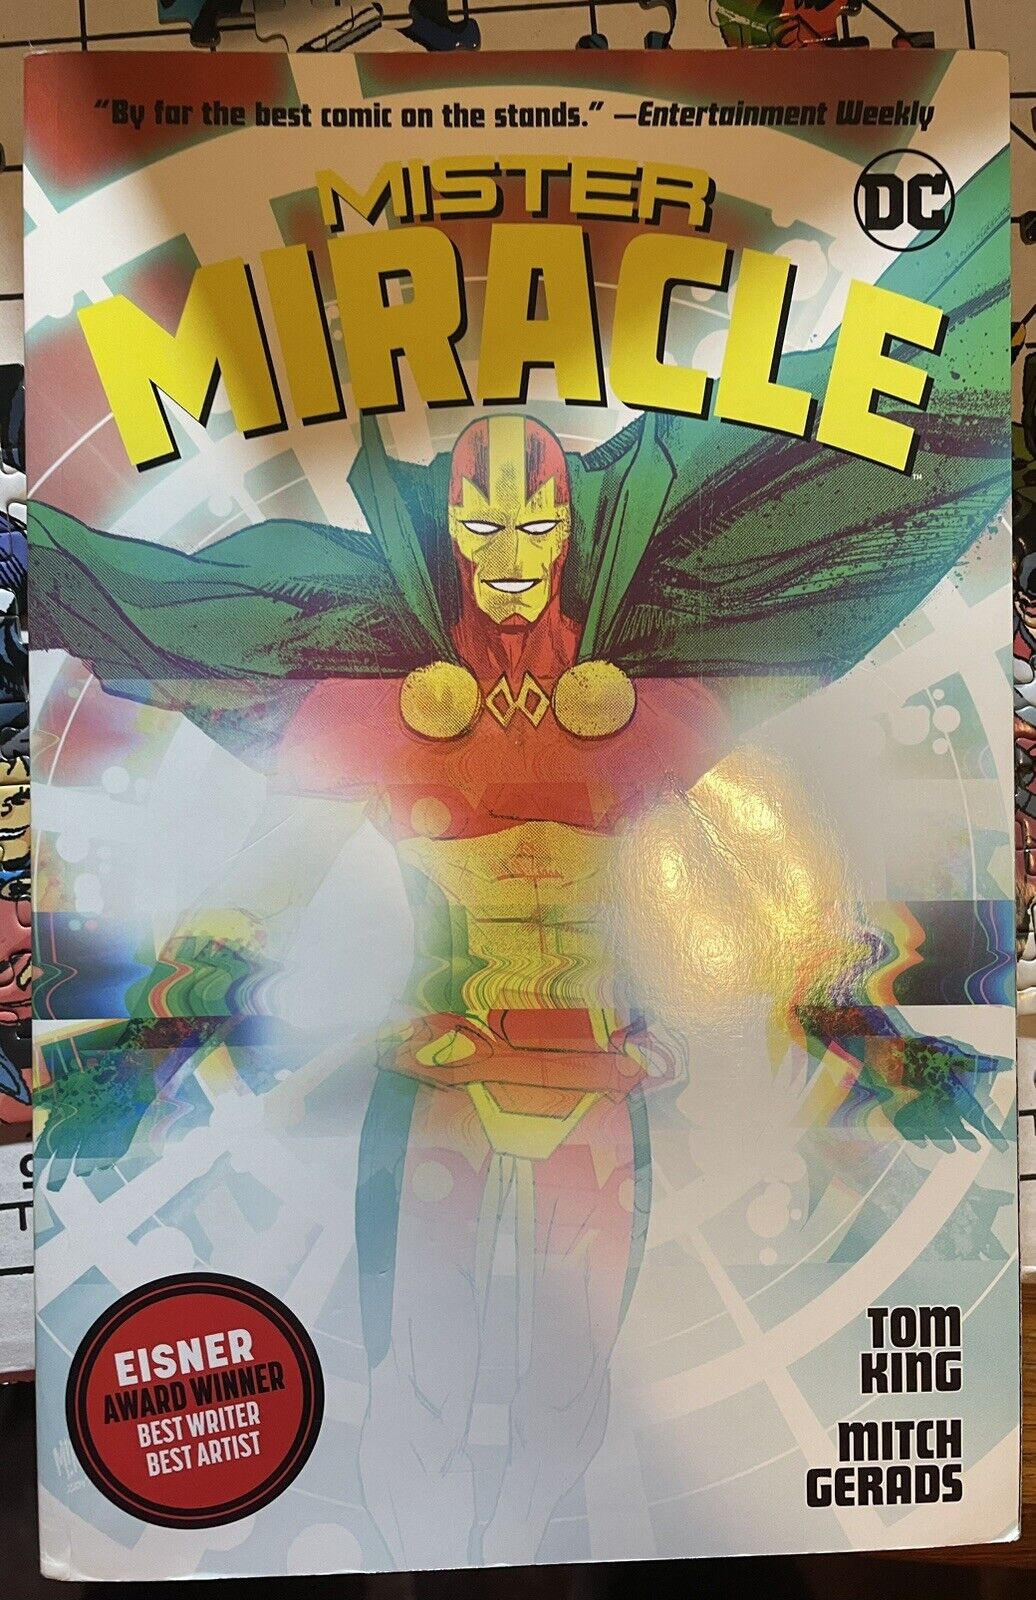 Mister Miracle (DC Comics April 2019) Tom King Mitch Gerards